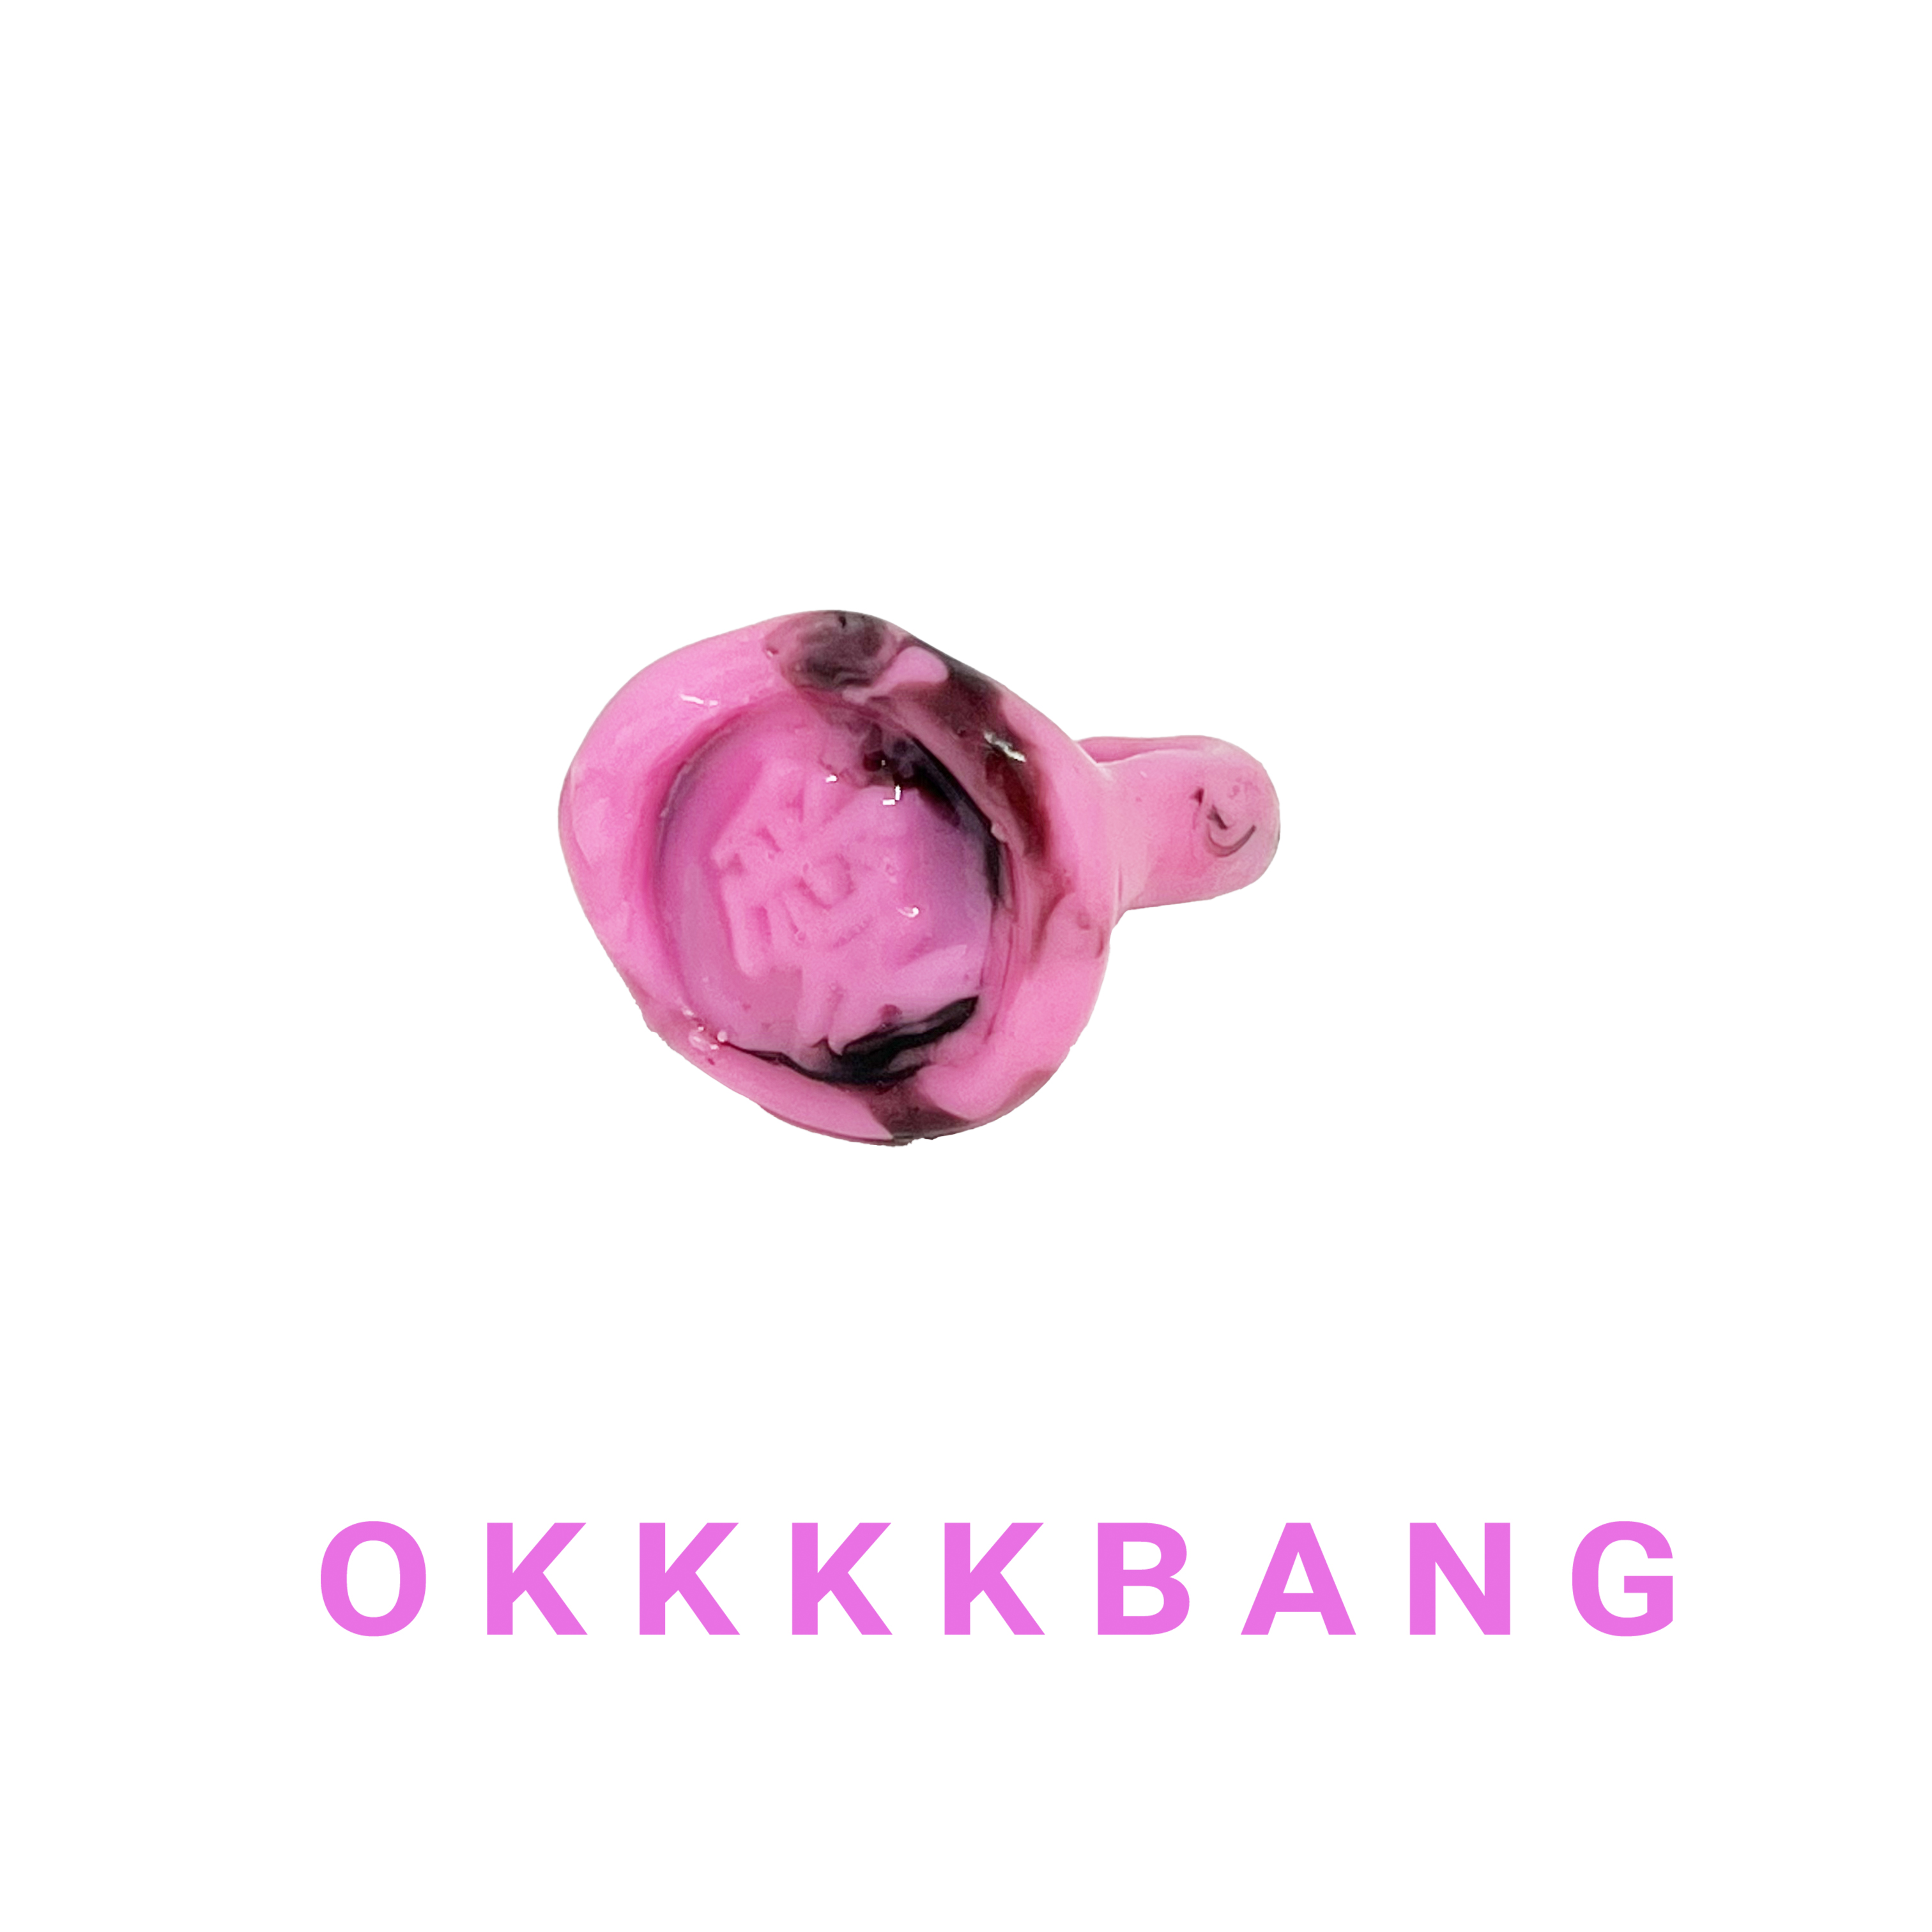 Okkkkbang原创设计小众可爱y2k风格粉黑撞色纹理火漆印章戒指女